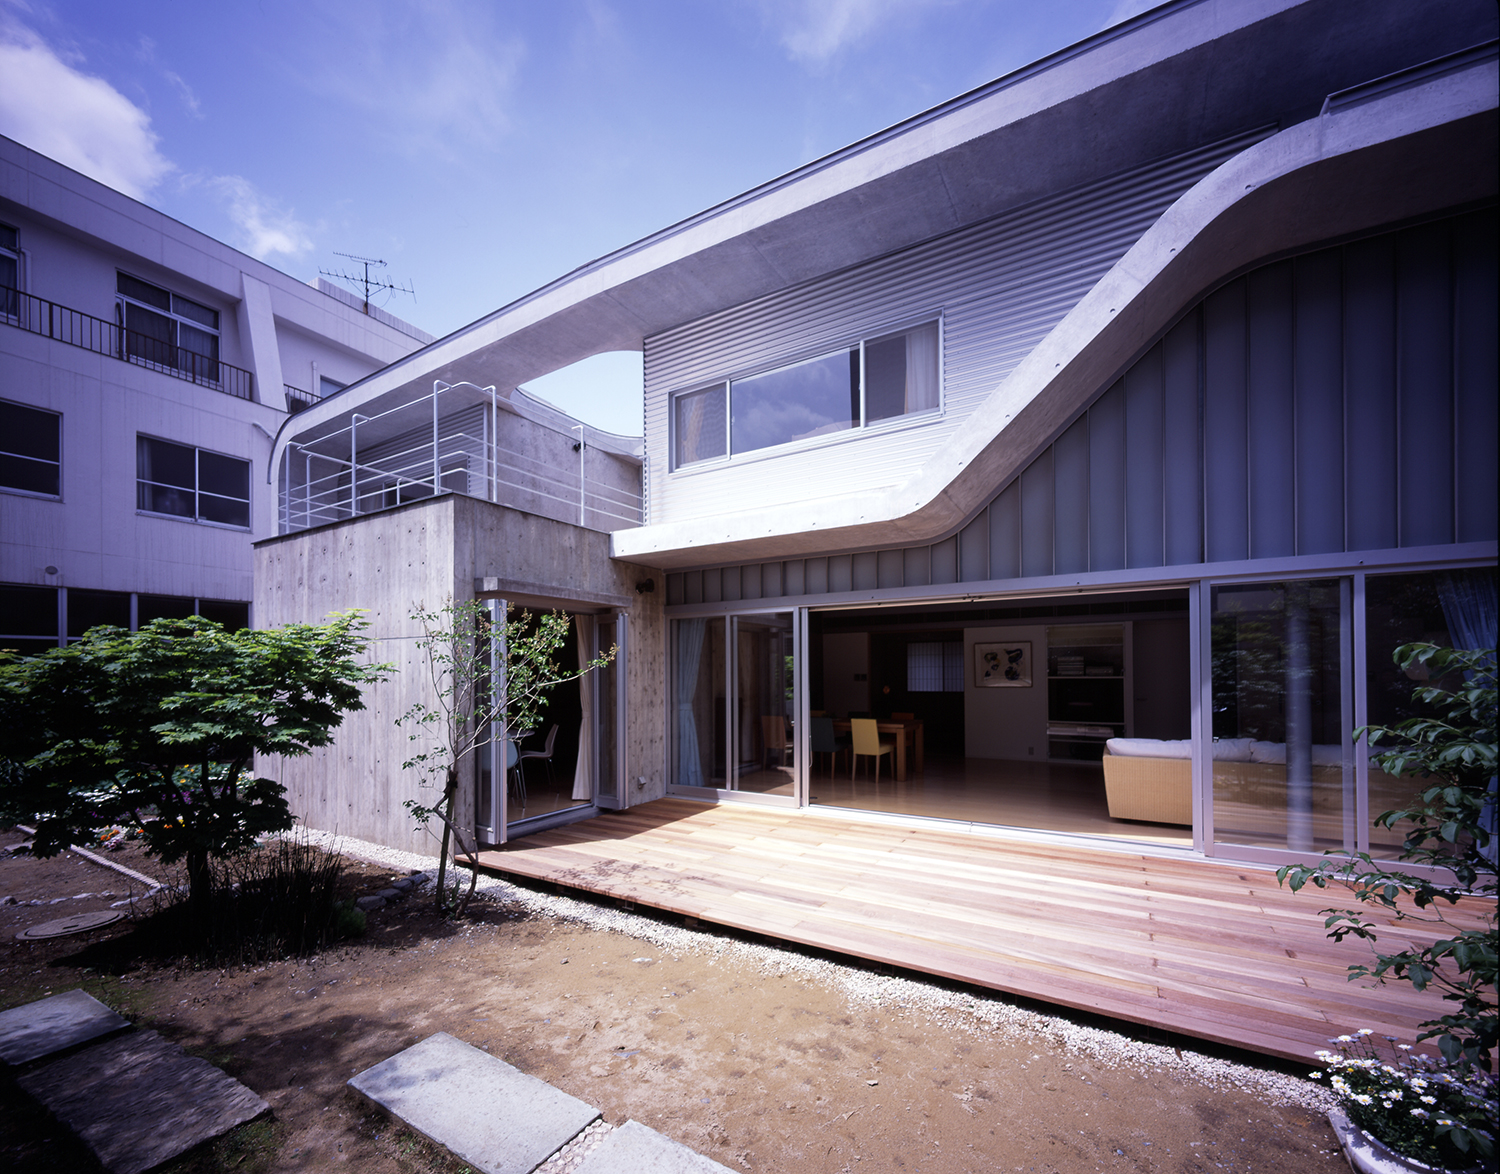 Continuous Plate House 2.0, Fukui, Japan / Ryumei Fujiki + Yukiko Sato / F.A.D.S